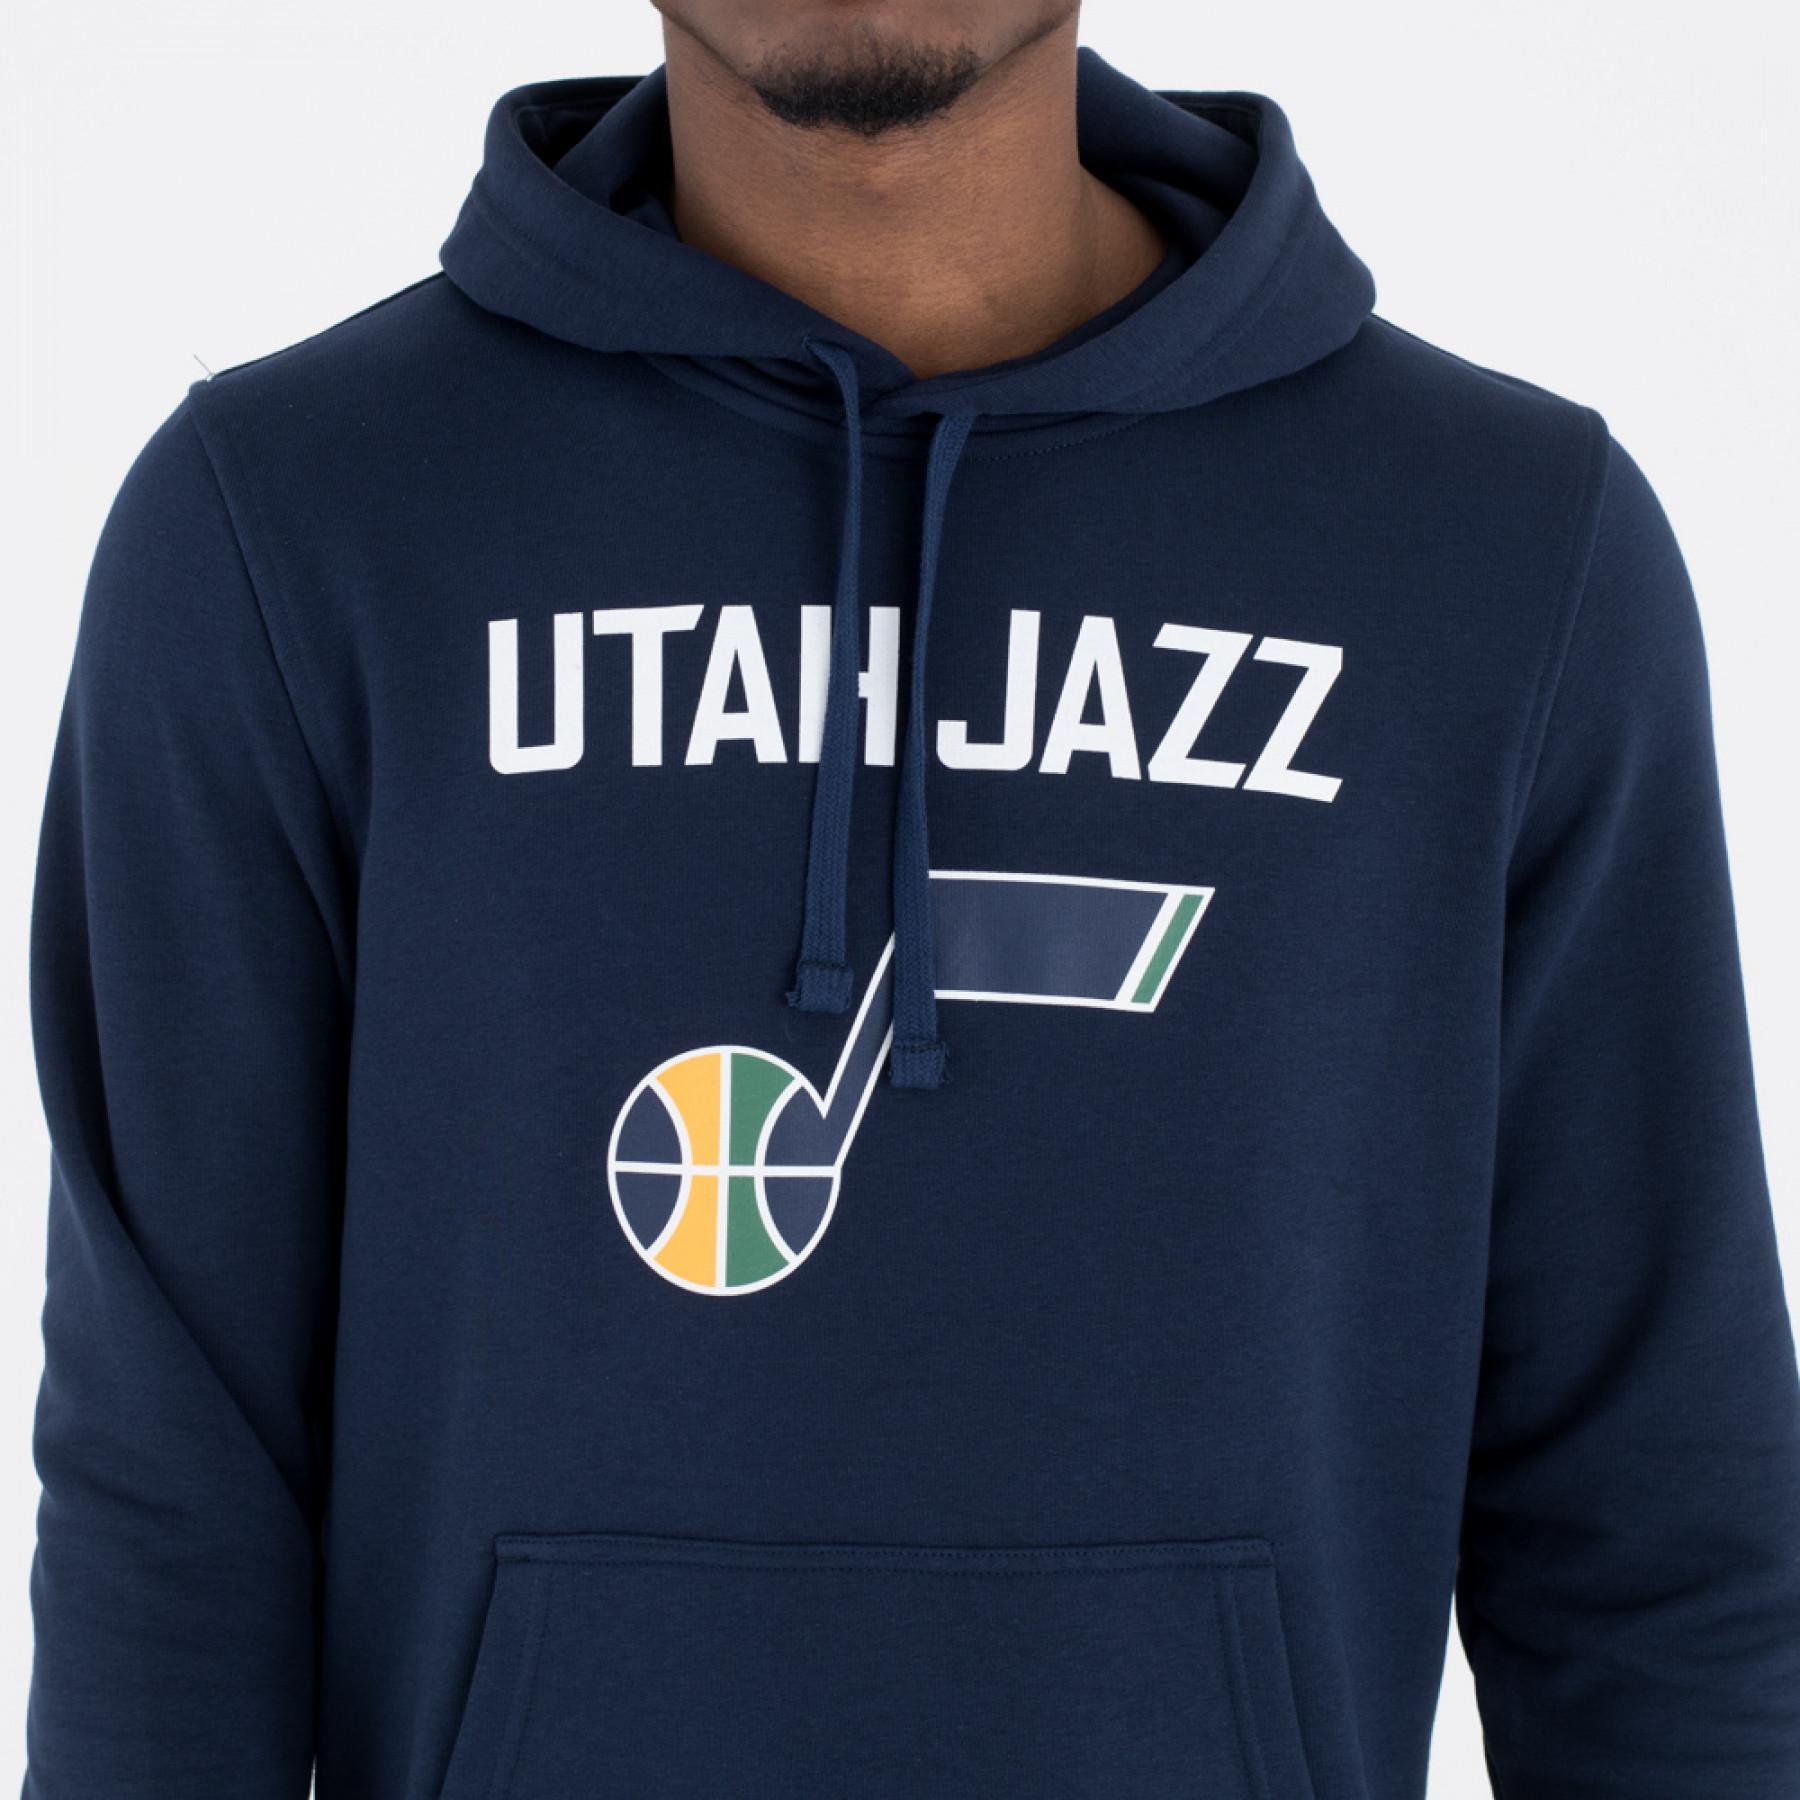 Hoodie New Era avec logo de l'équipe Uath Jazz